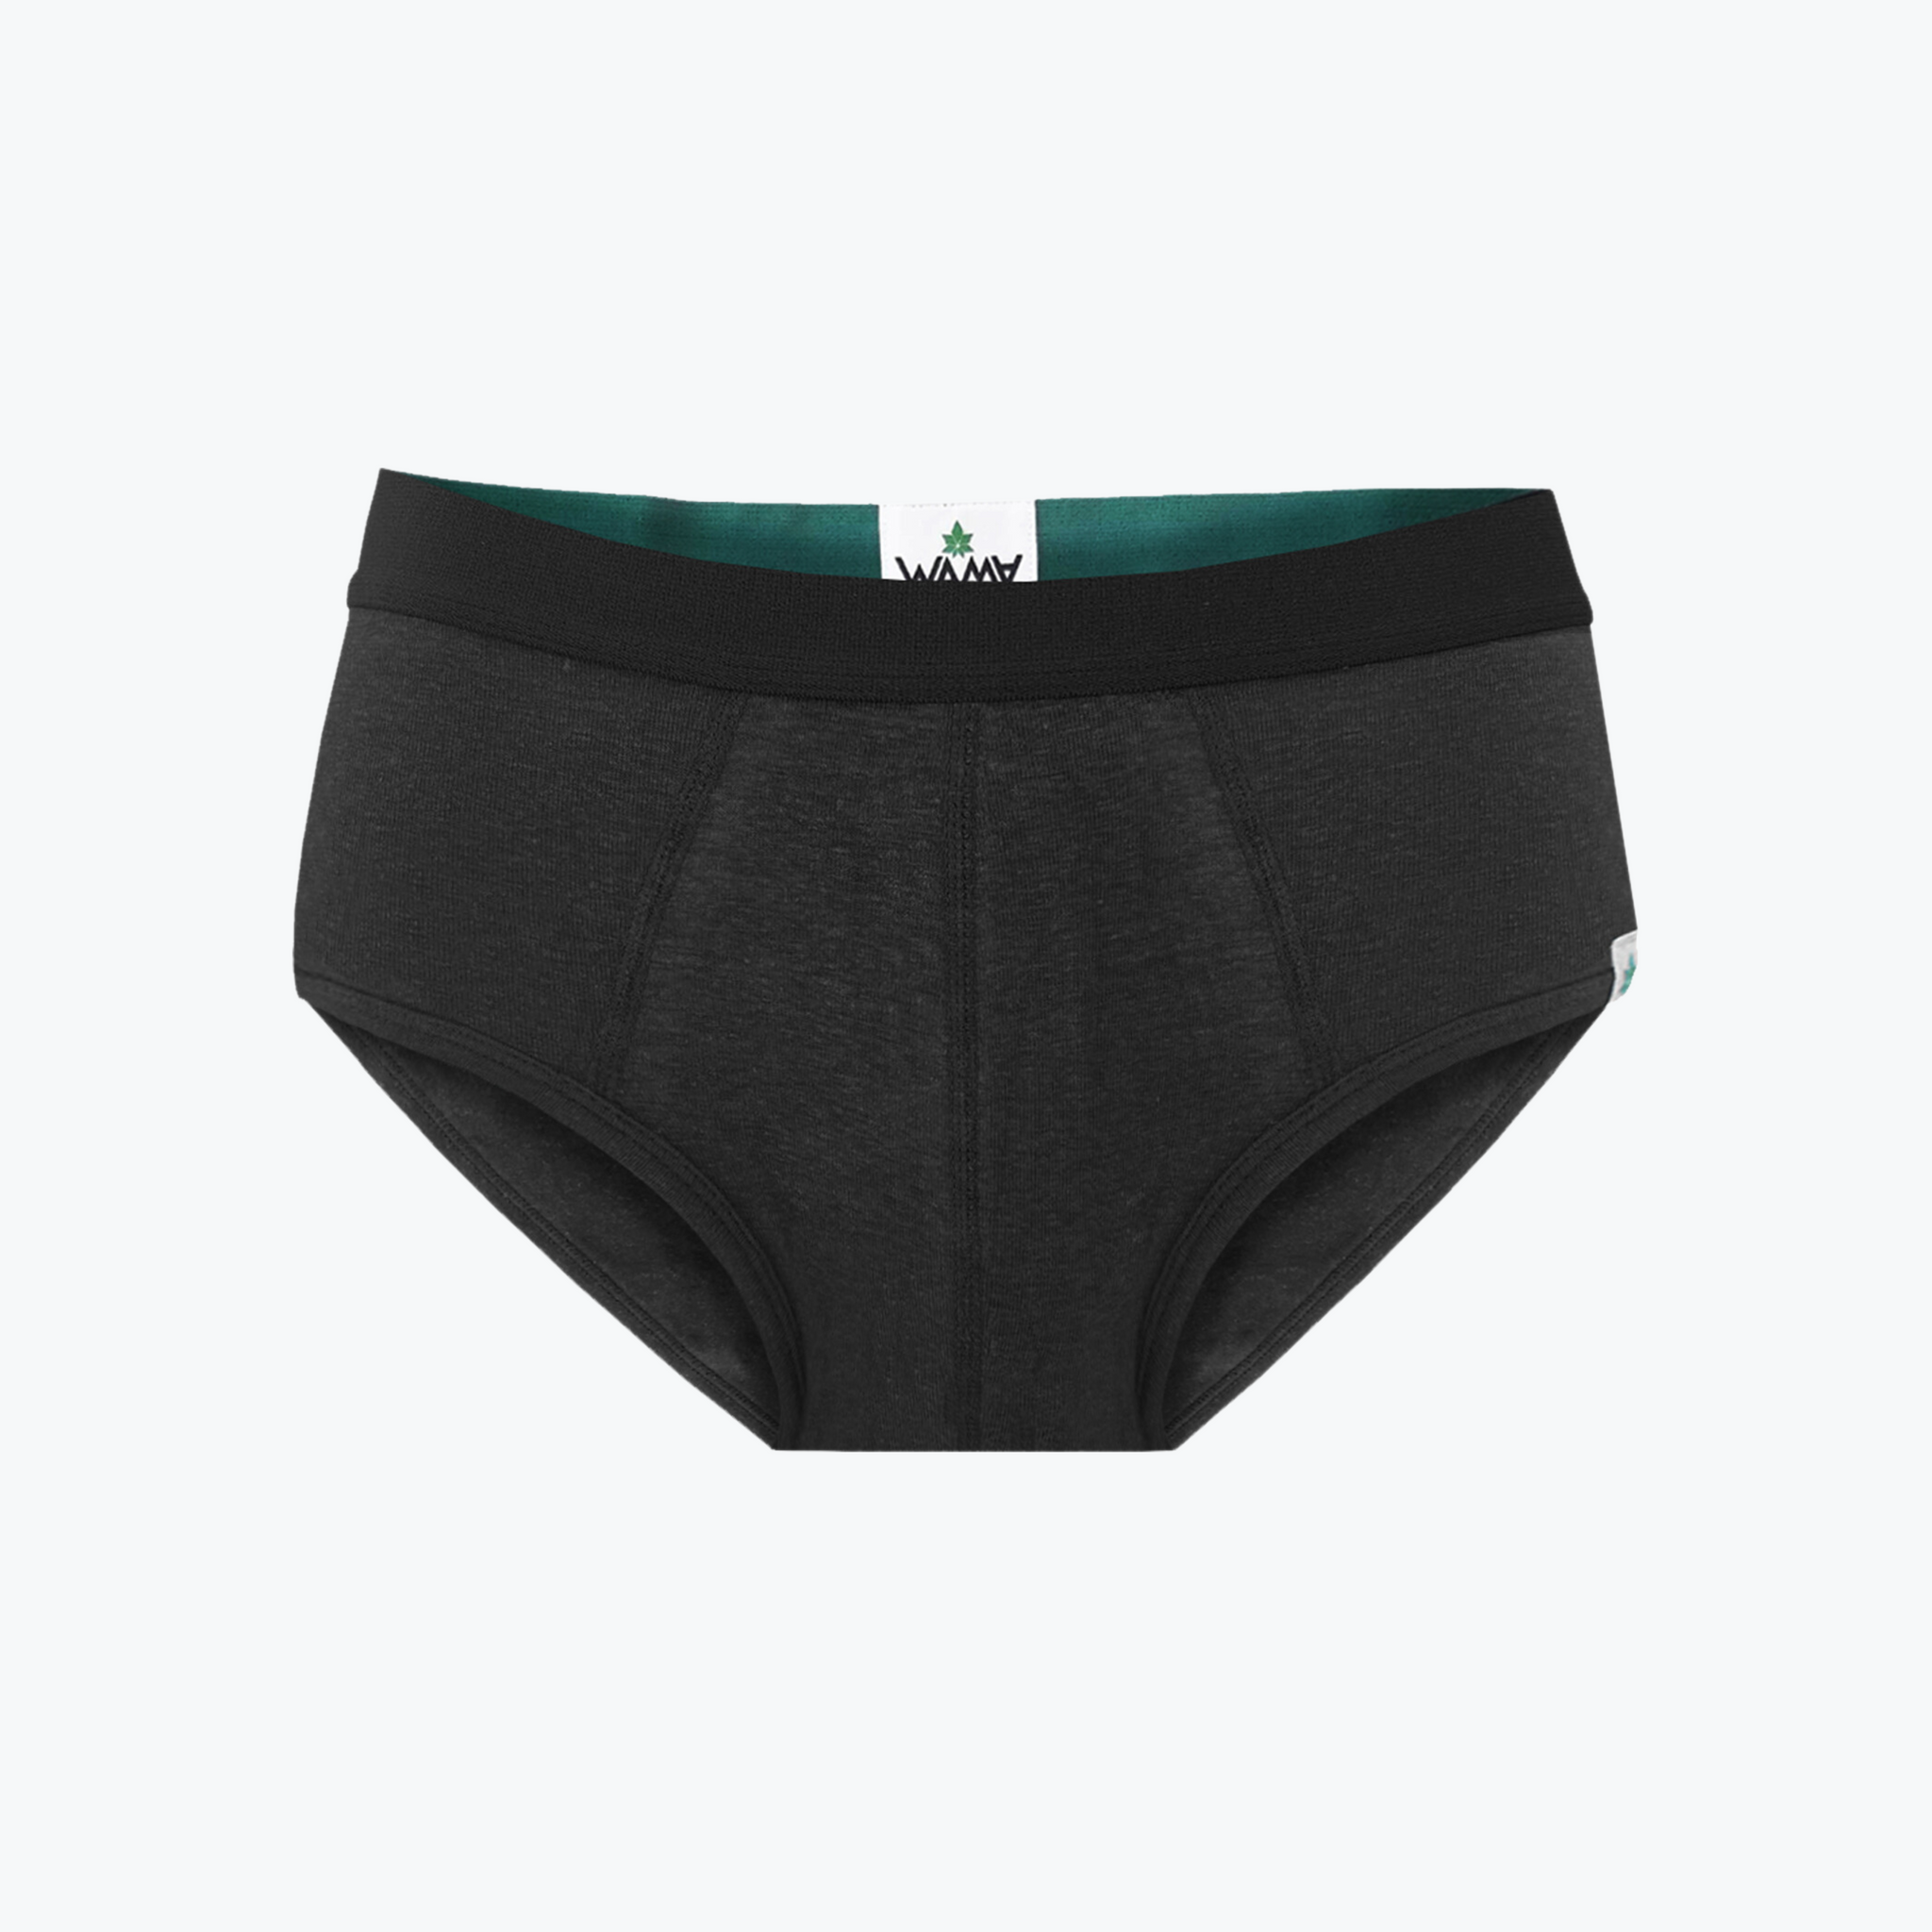 Mens Hemp Underwear Boxer Shorts - drawstring briefs - loose fit boxers for  men - Natural briefs ((XL) 36-38 inch waist)